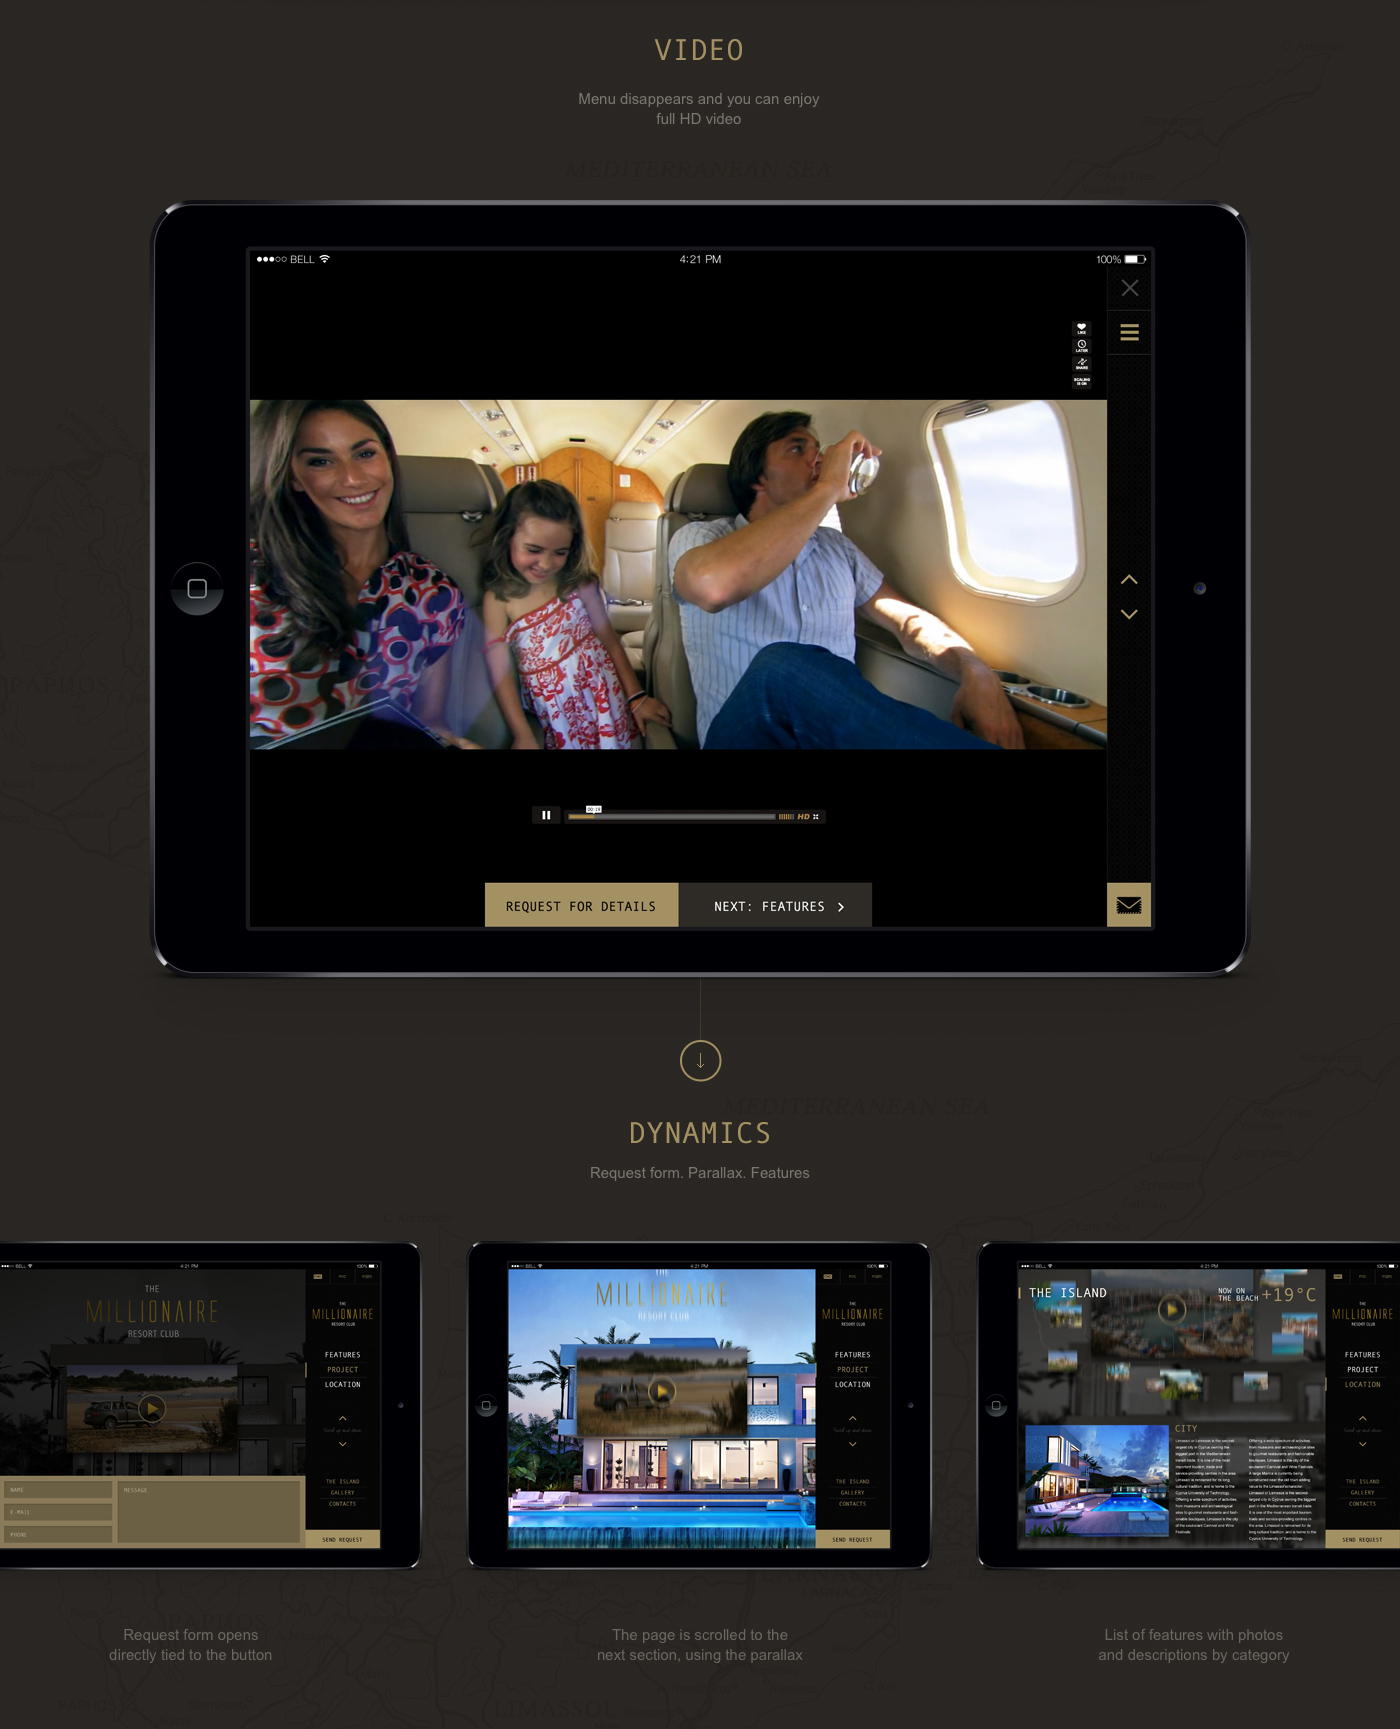 Web iPad Interface resort millionaire design interactive site parallax Lux luxury cyprus limassol